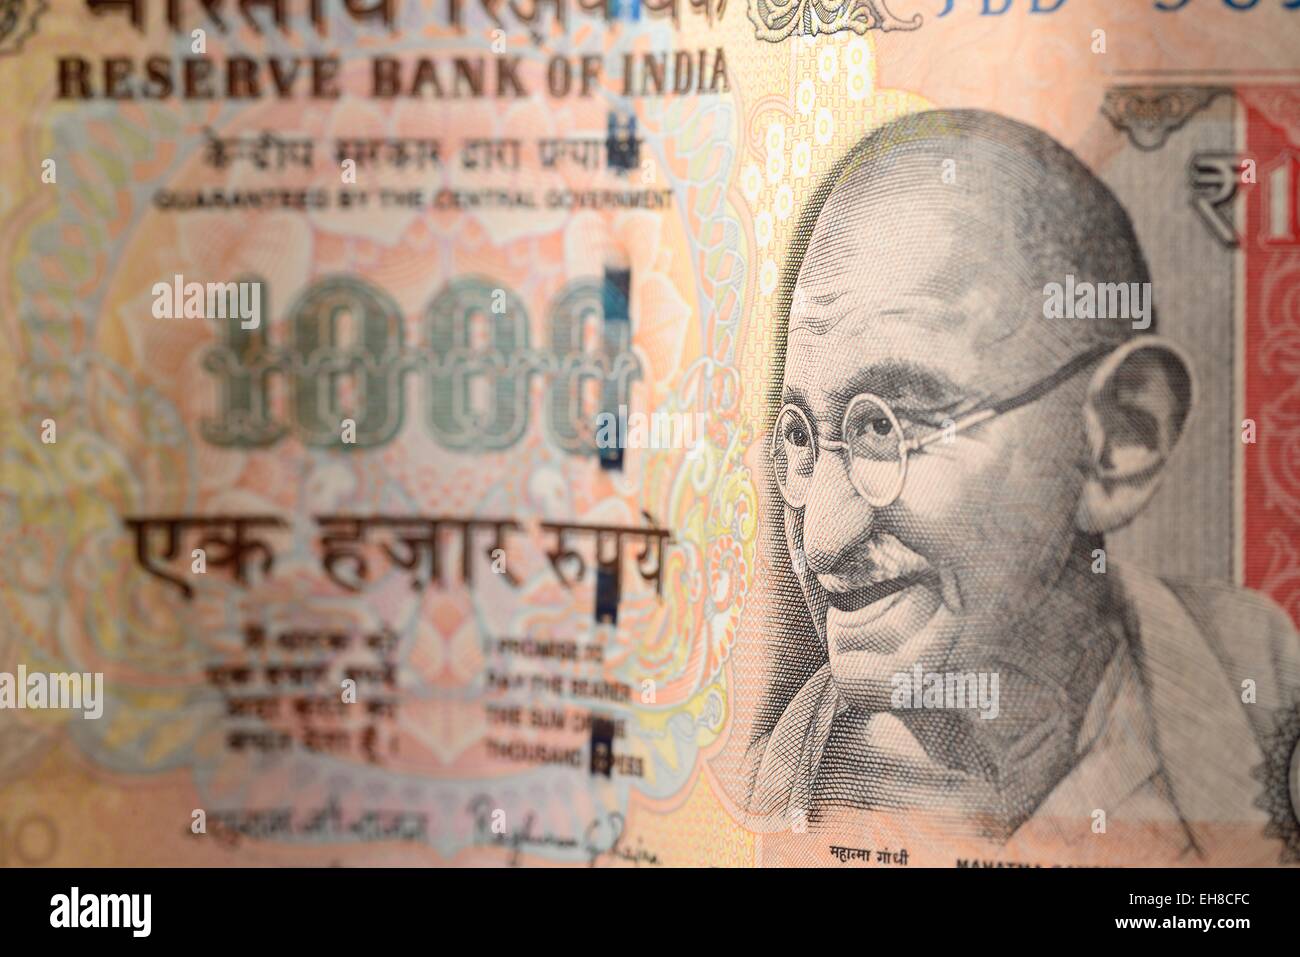 Indian One Thousand Rupee Note with Mahatma Gandhi Portrait Stock Photo